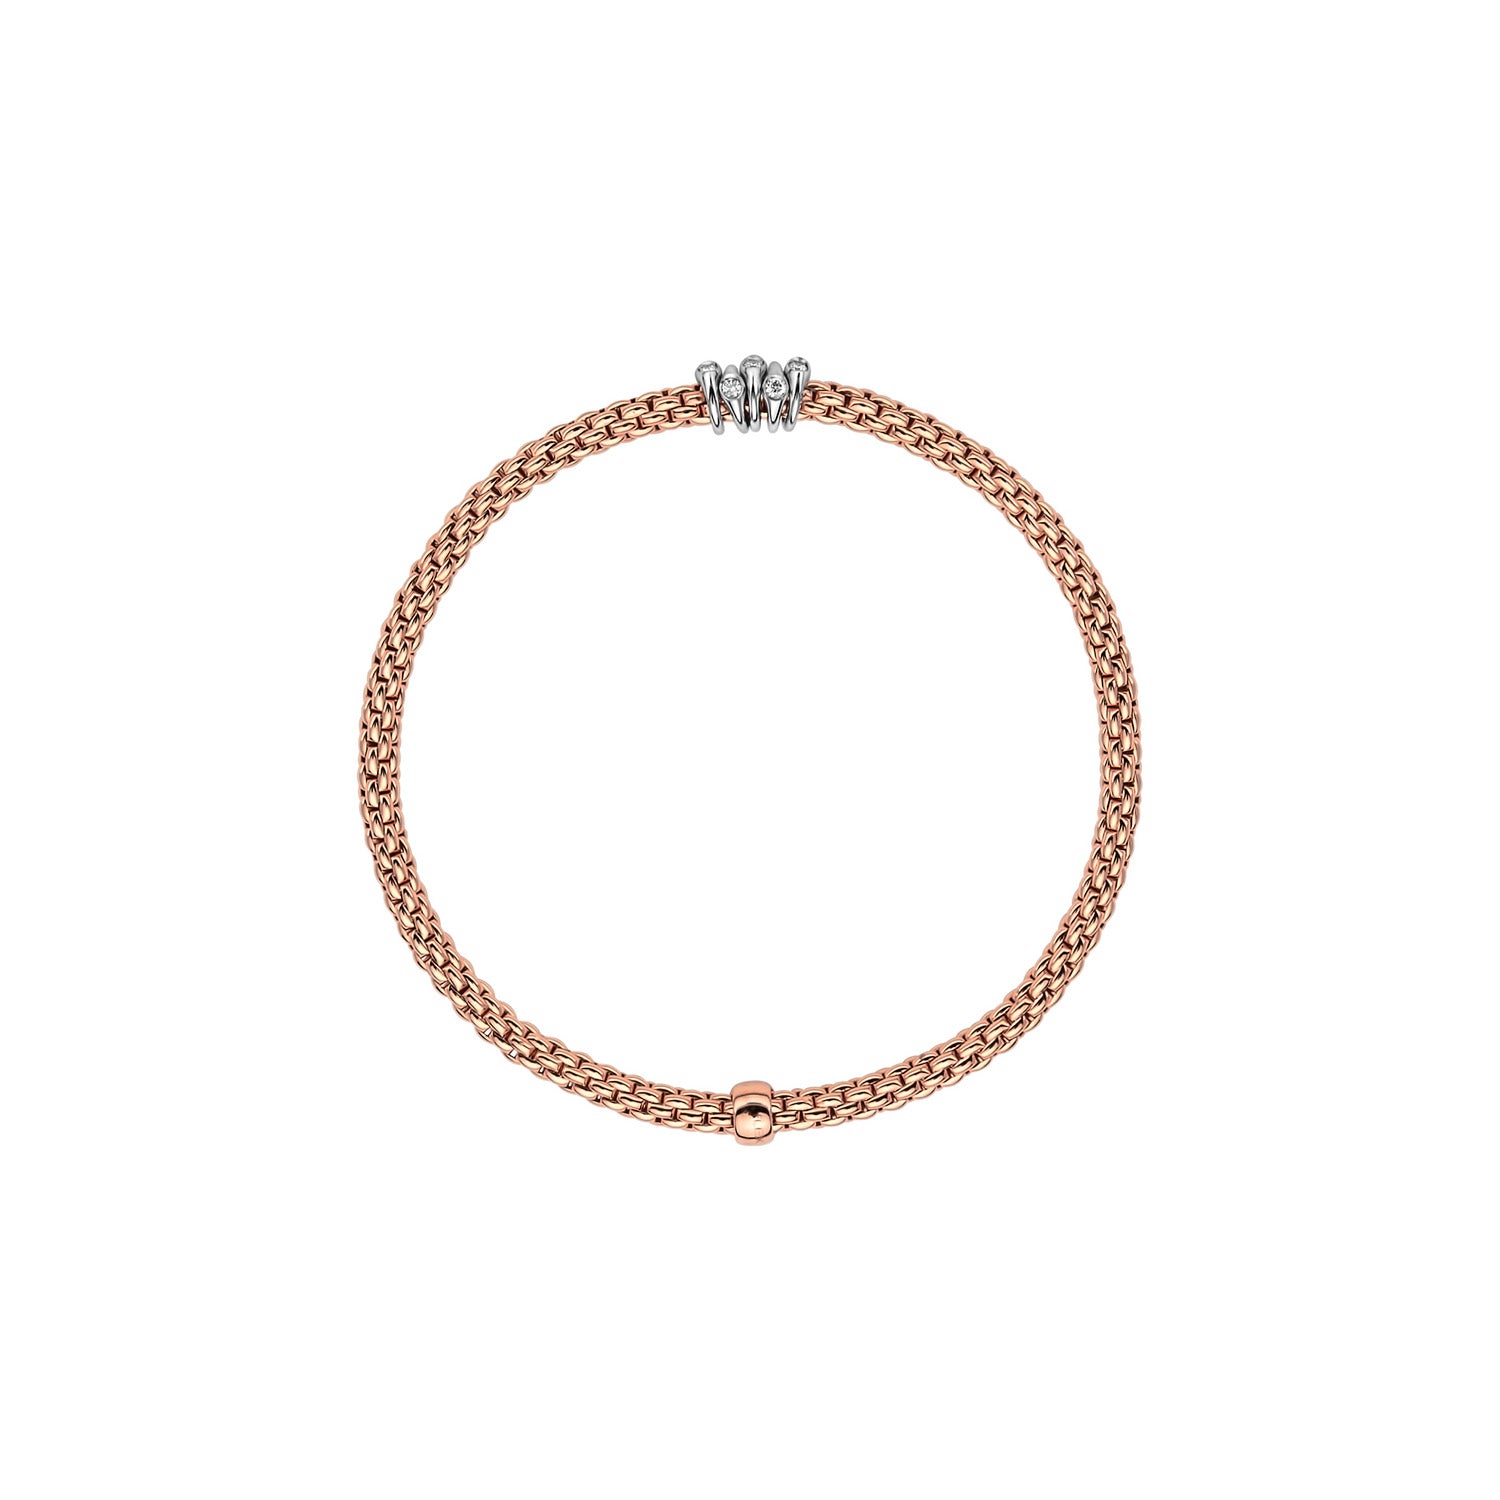 Prima Flex'it bracelet with diamonds in rose gold